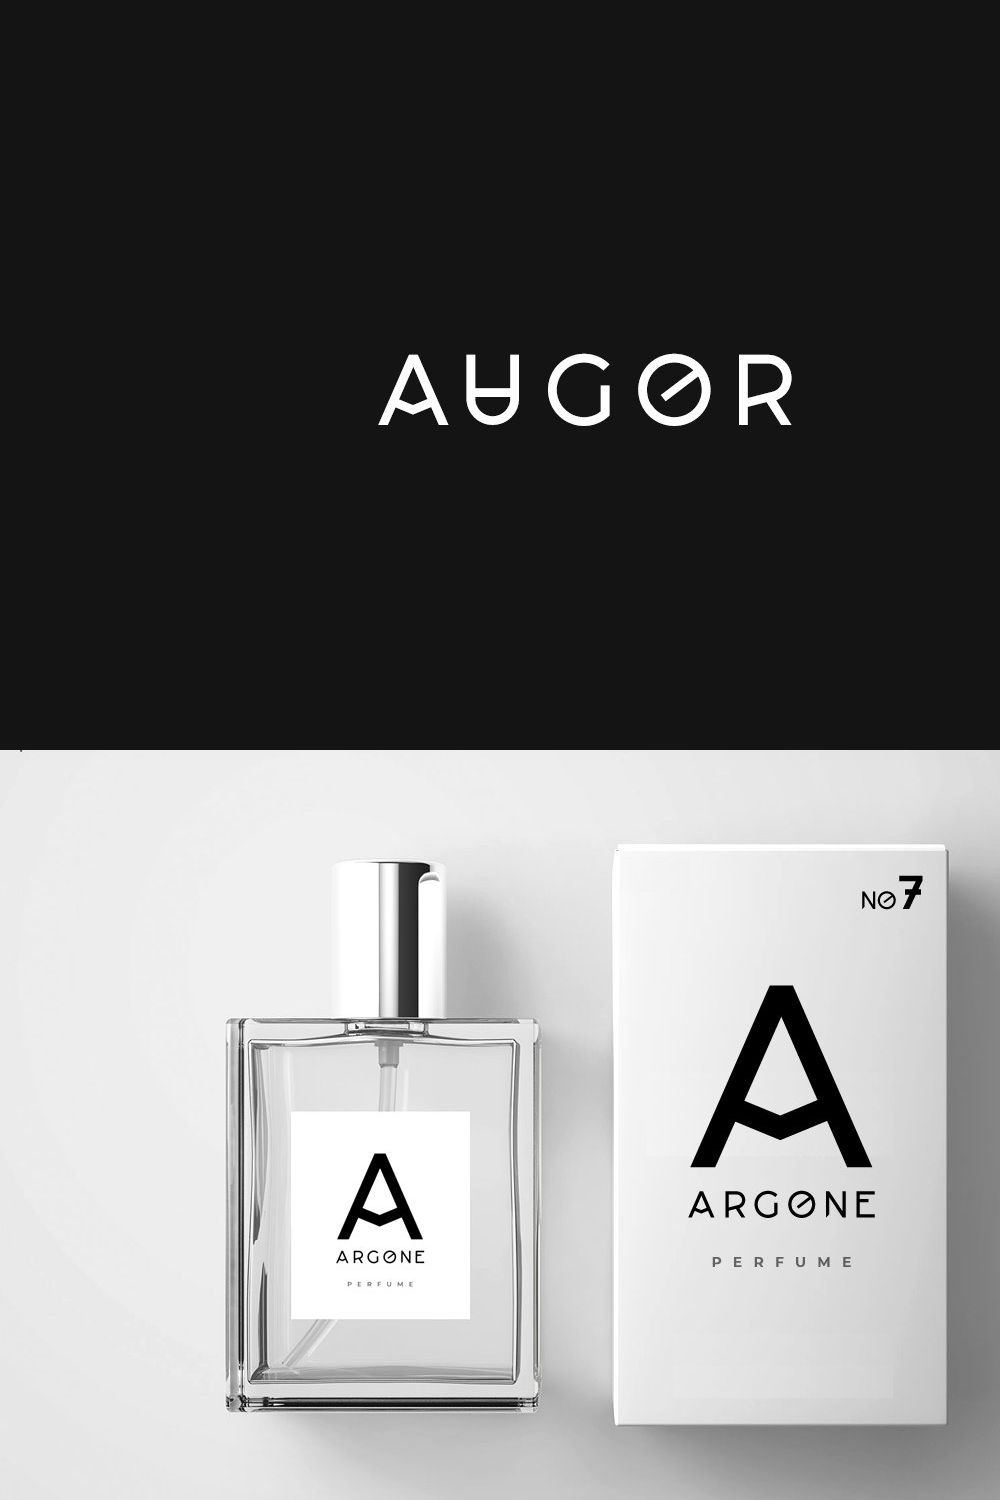 AUGOR - Unique Display Logo Typeface pinterest preview image.